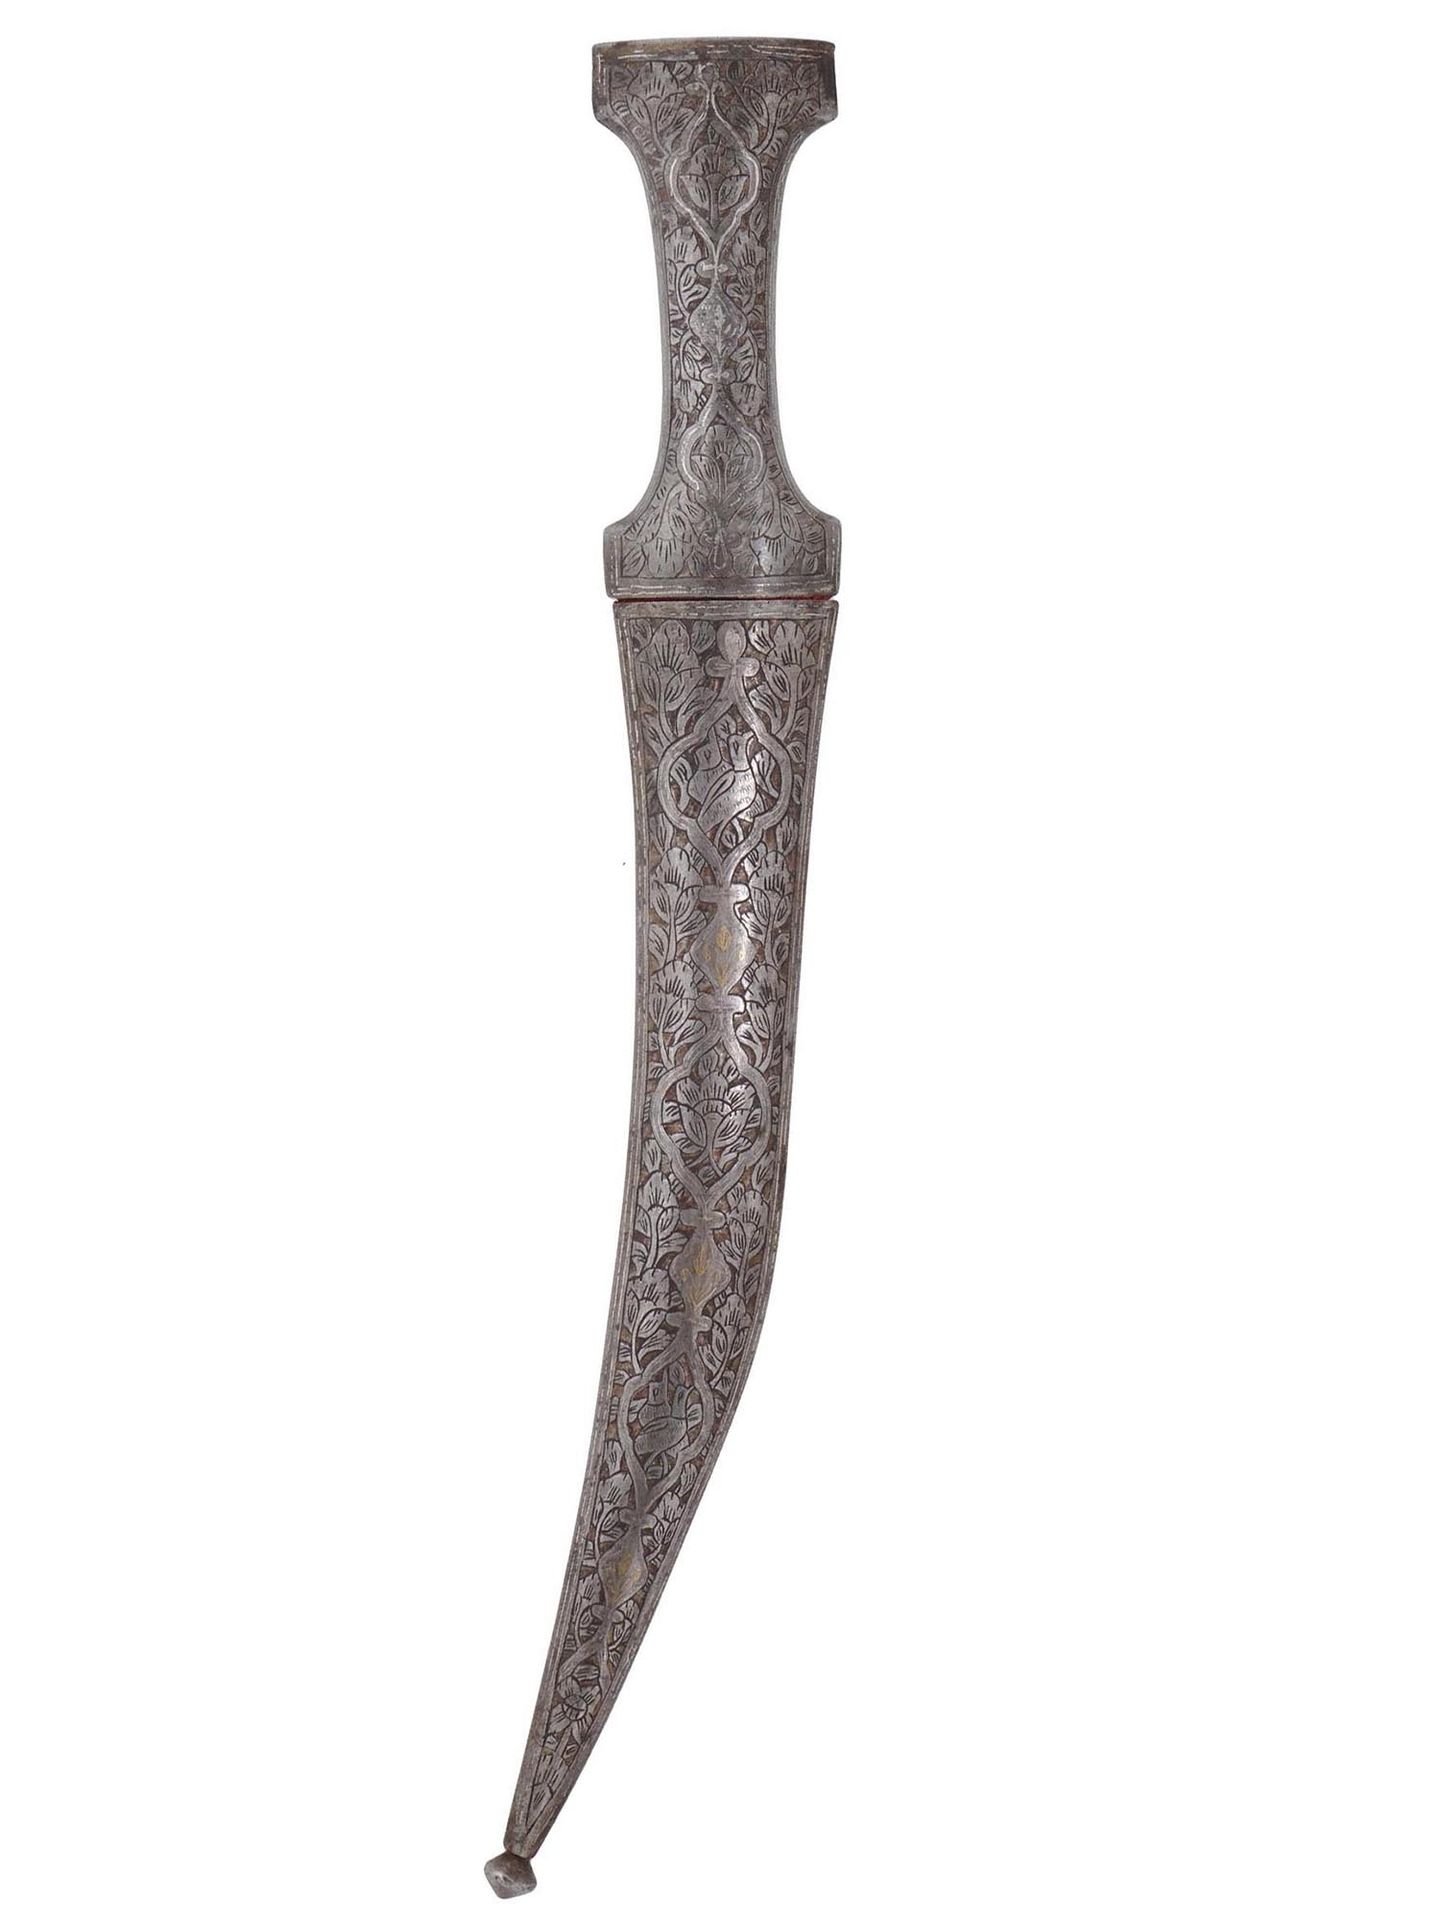 Null Khanjar persan, dague zirah bouk de la période Qajar à lame ondulée en acie&hellip;